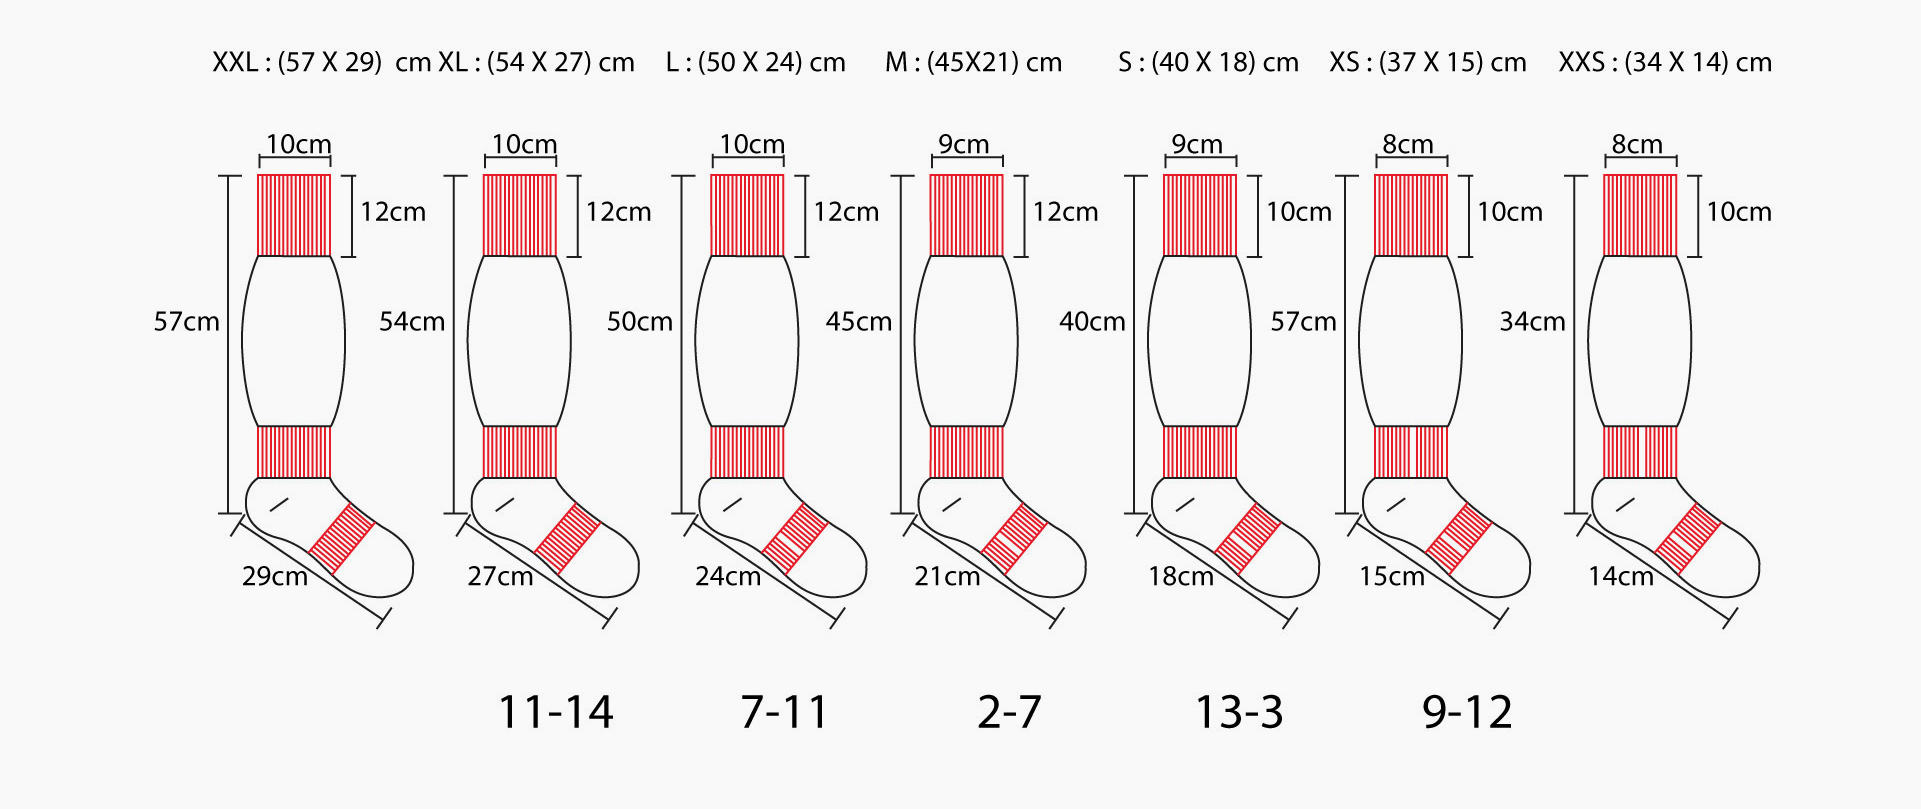 Sock Size Chart Cm